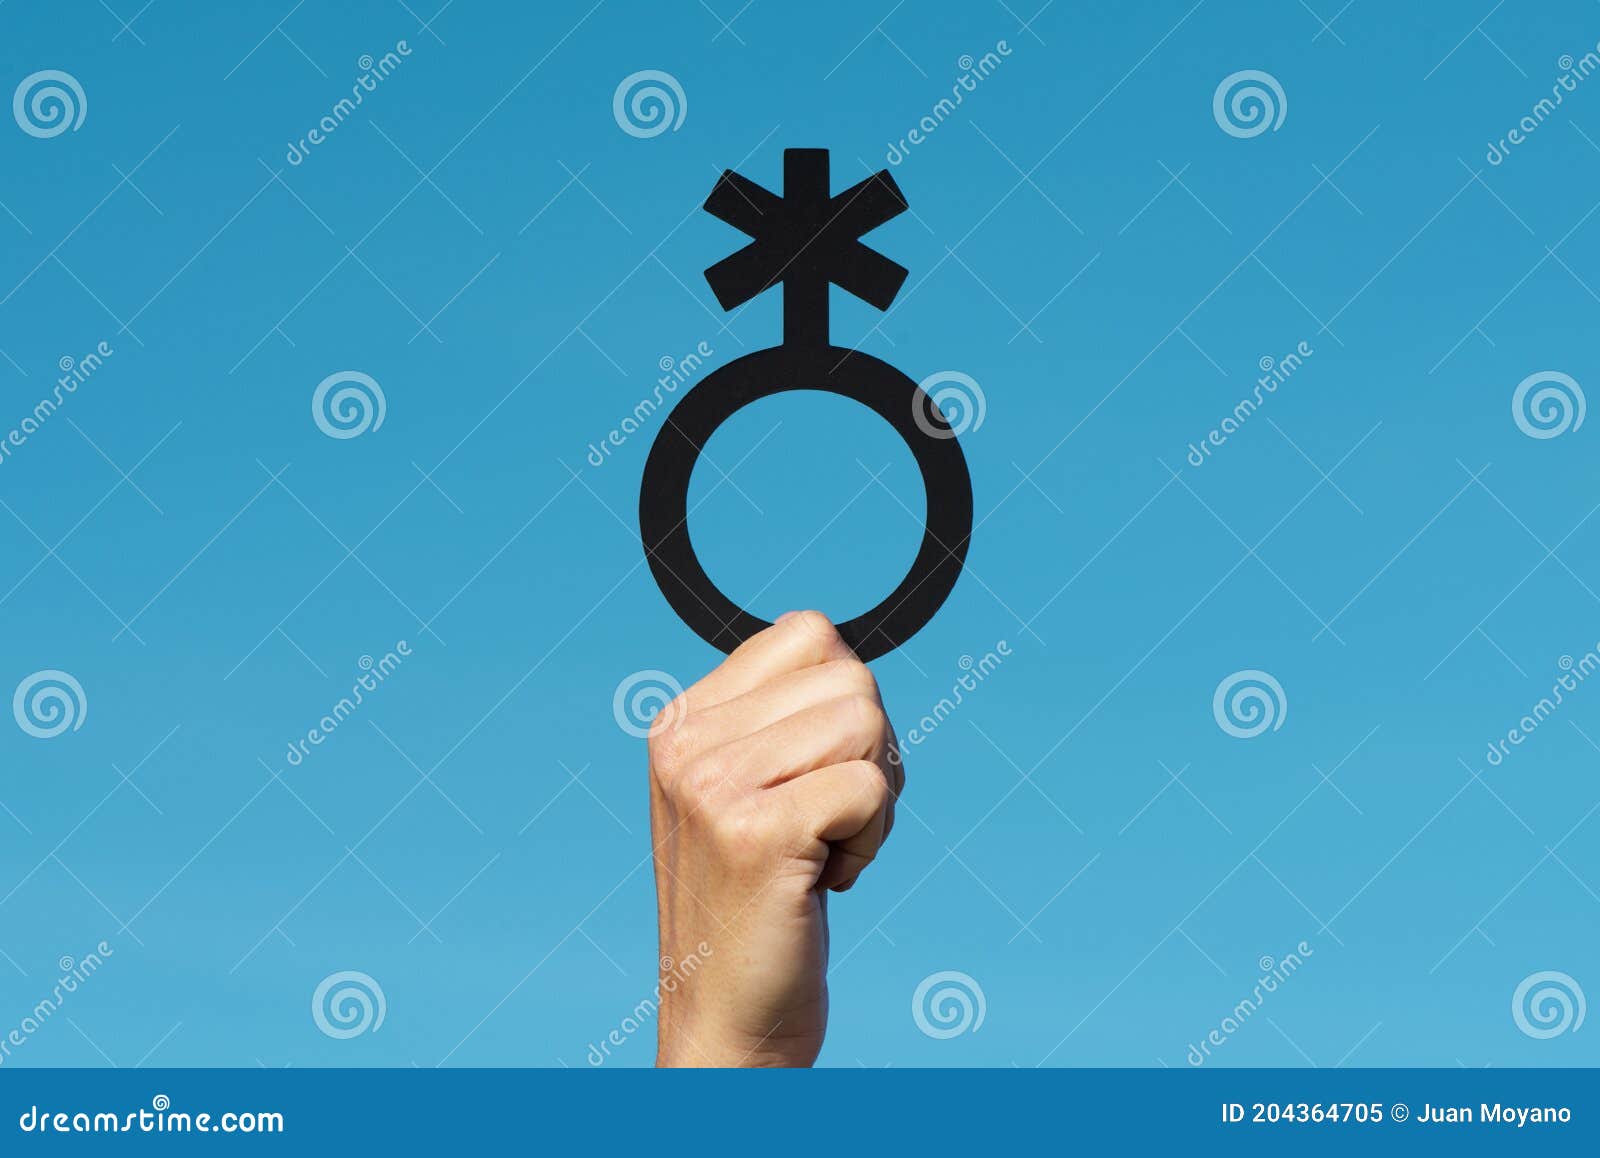 Non Binary Gender Symbol Gender Symbols In Pride Rainbow Colors Stock